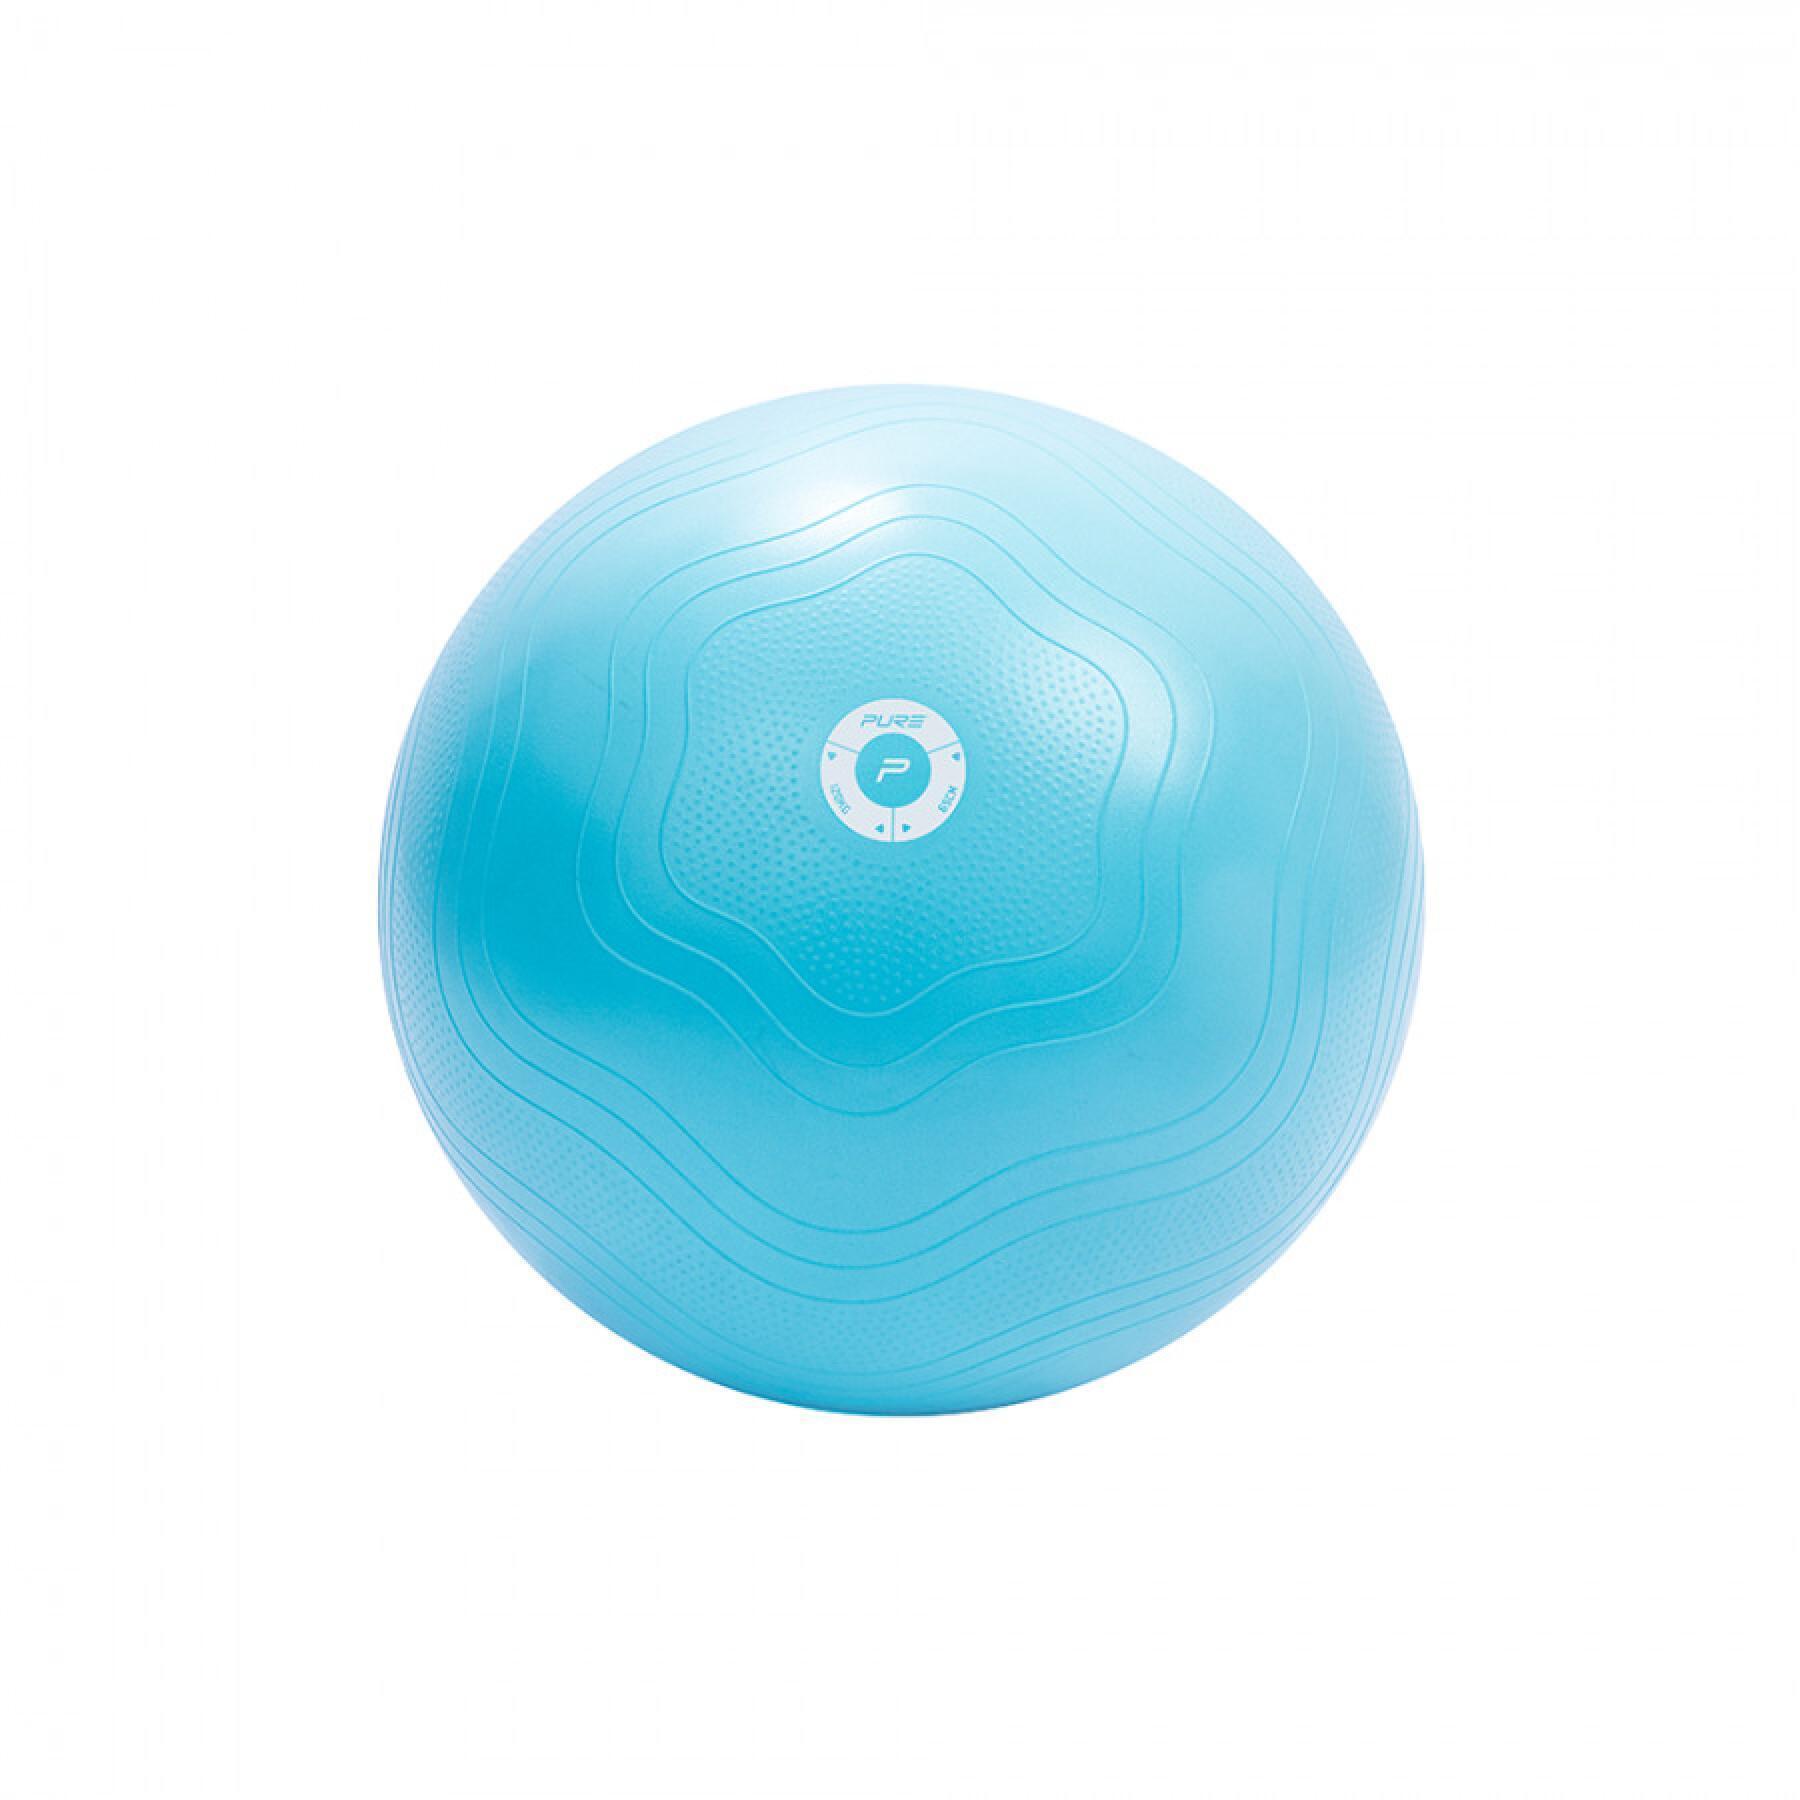 Yoga ball Pure2Improve antiburst - Balloons - Yoga - Physical